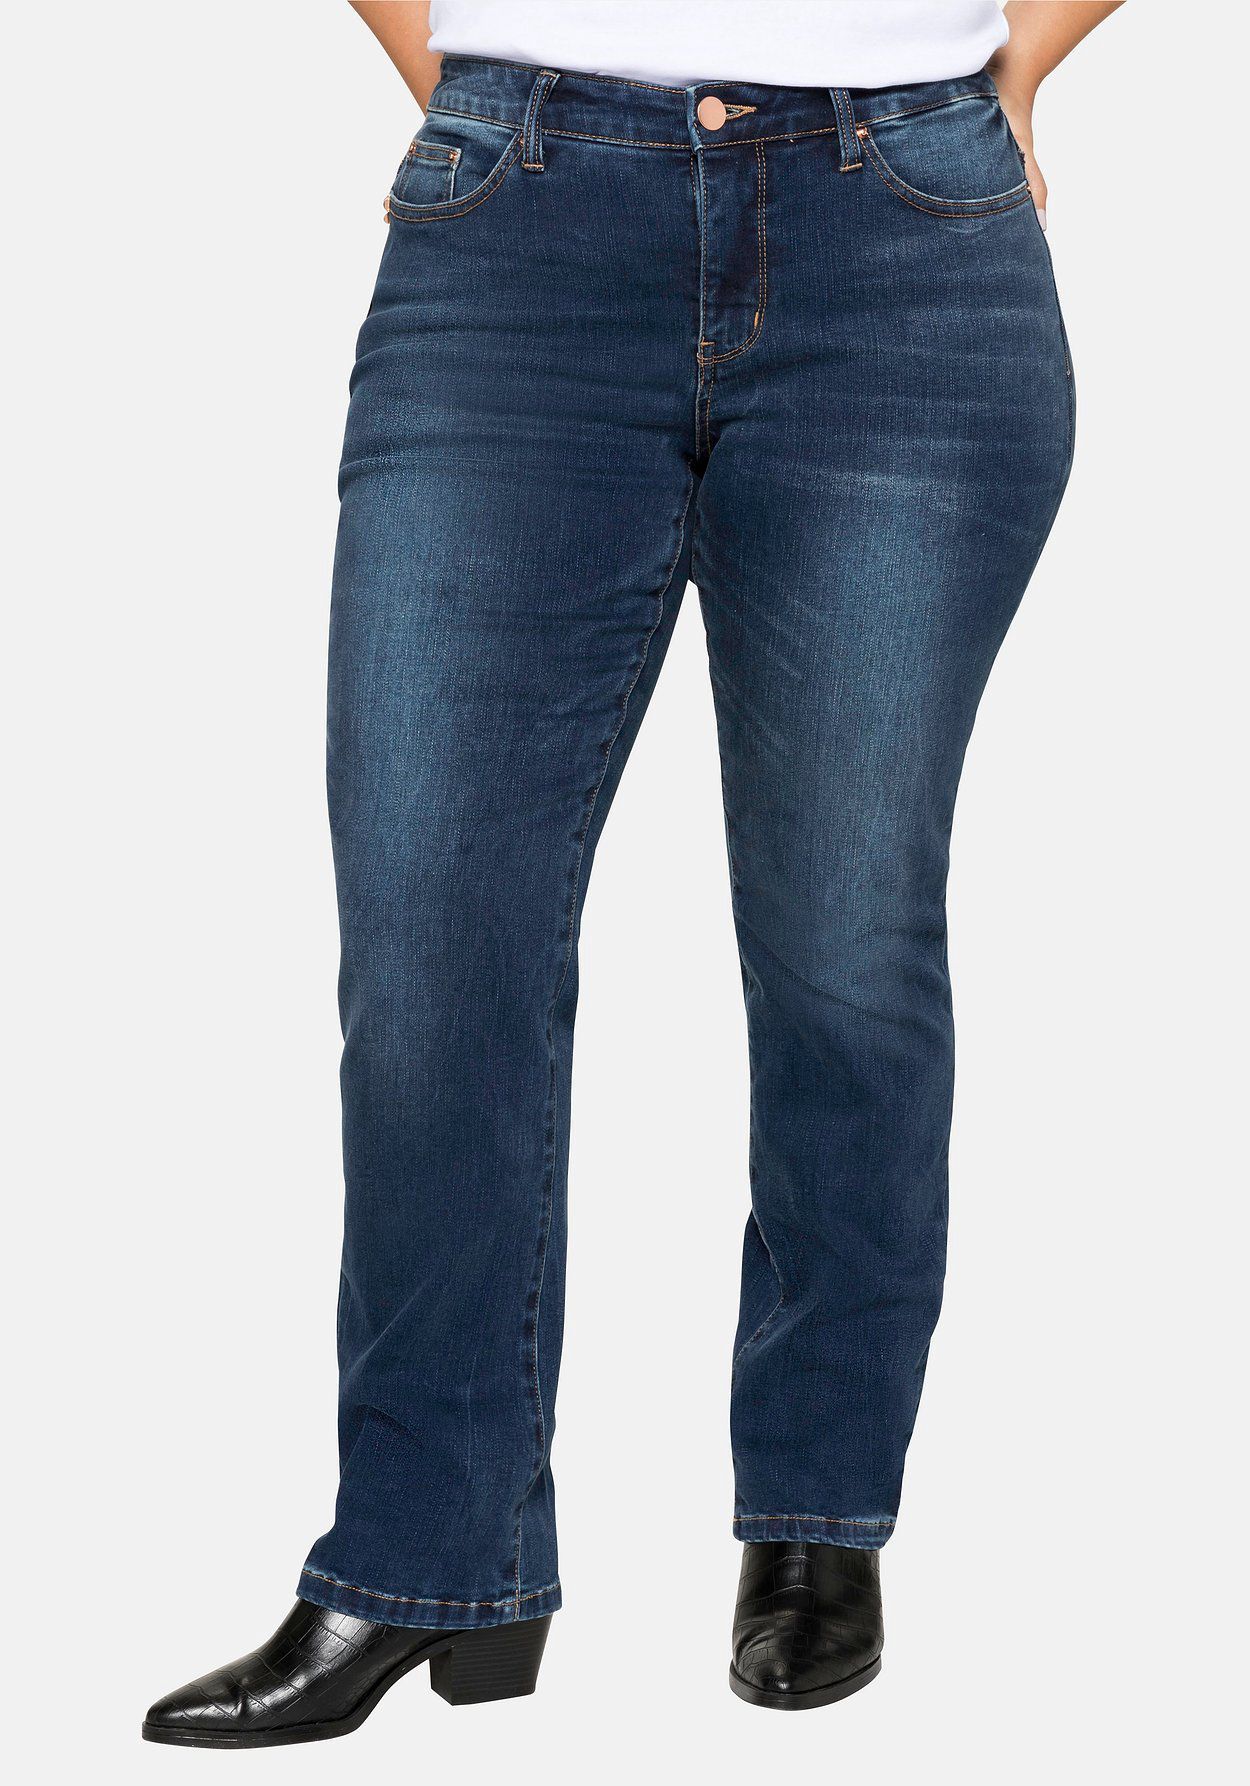 sheego Jeans mit Bodyforming-Effekt | GALERIA | Stretchjeans